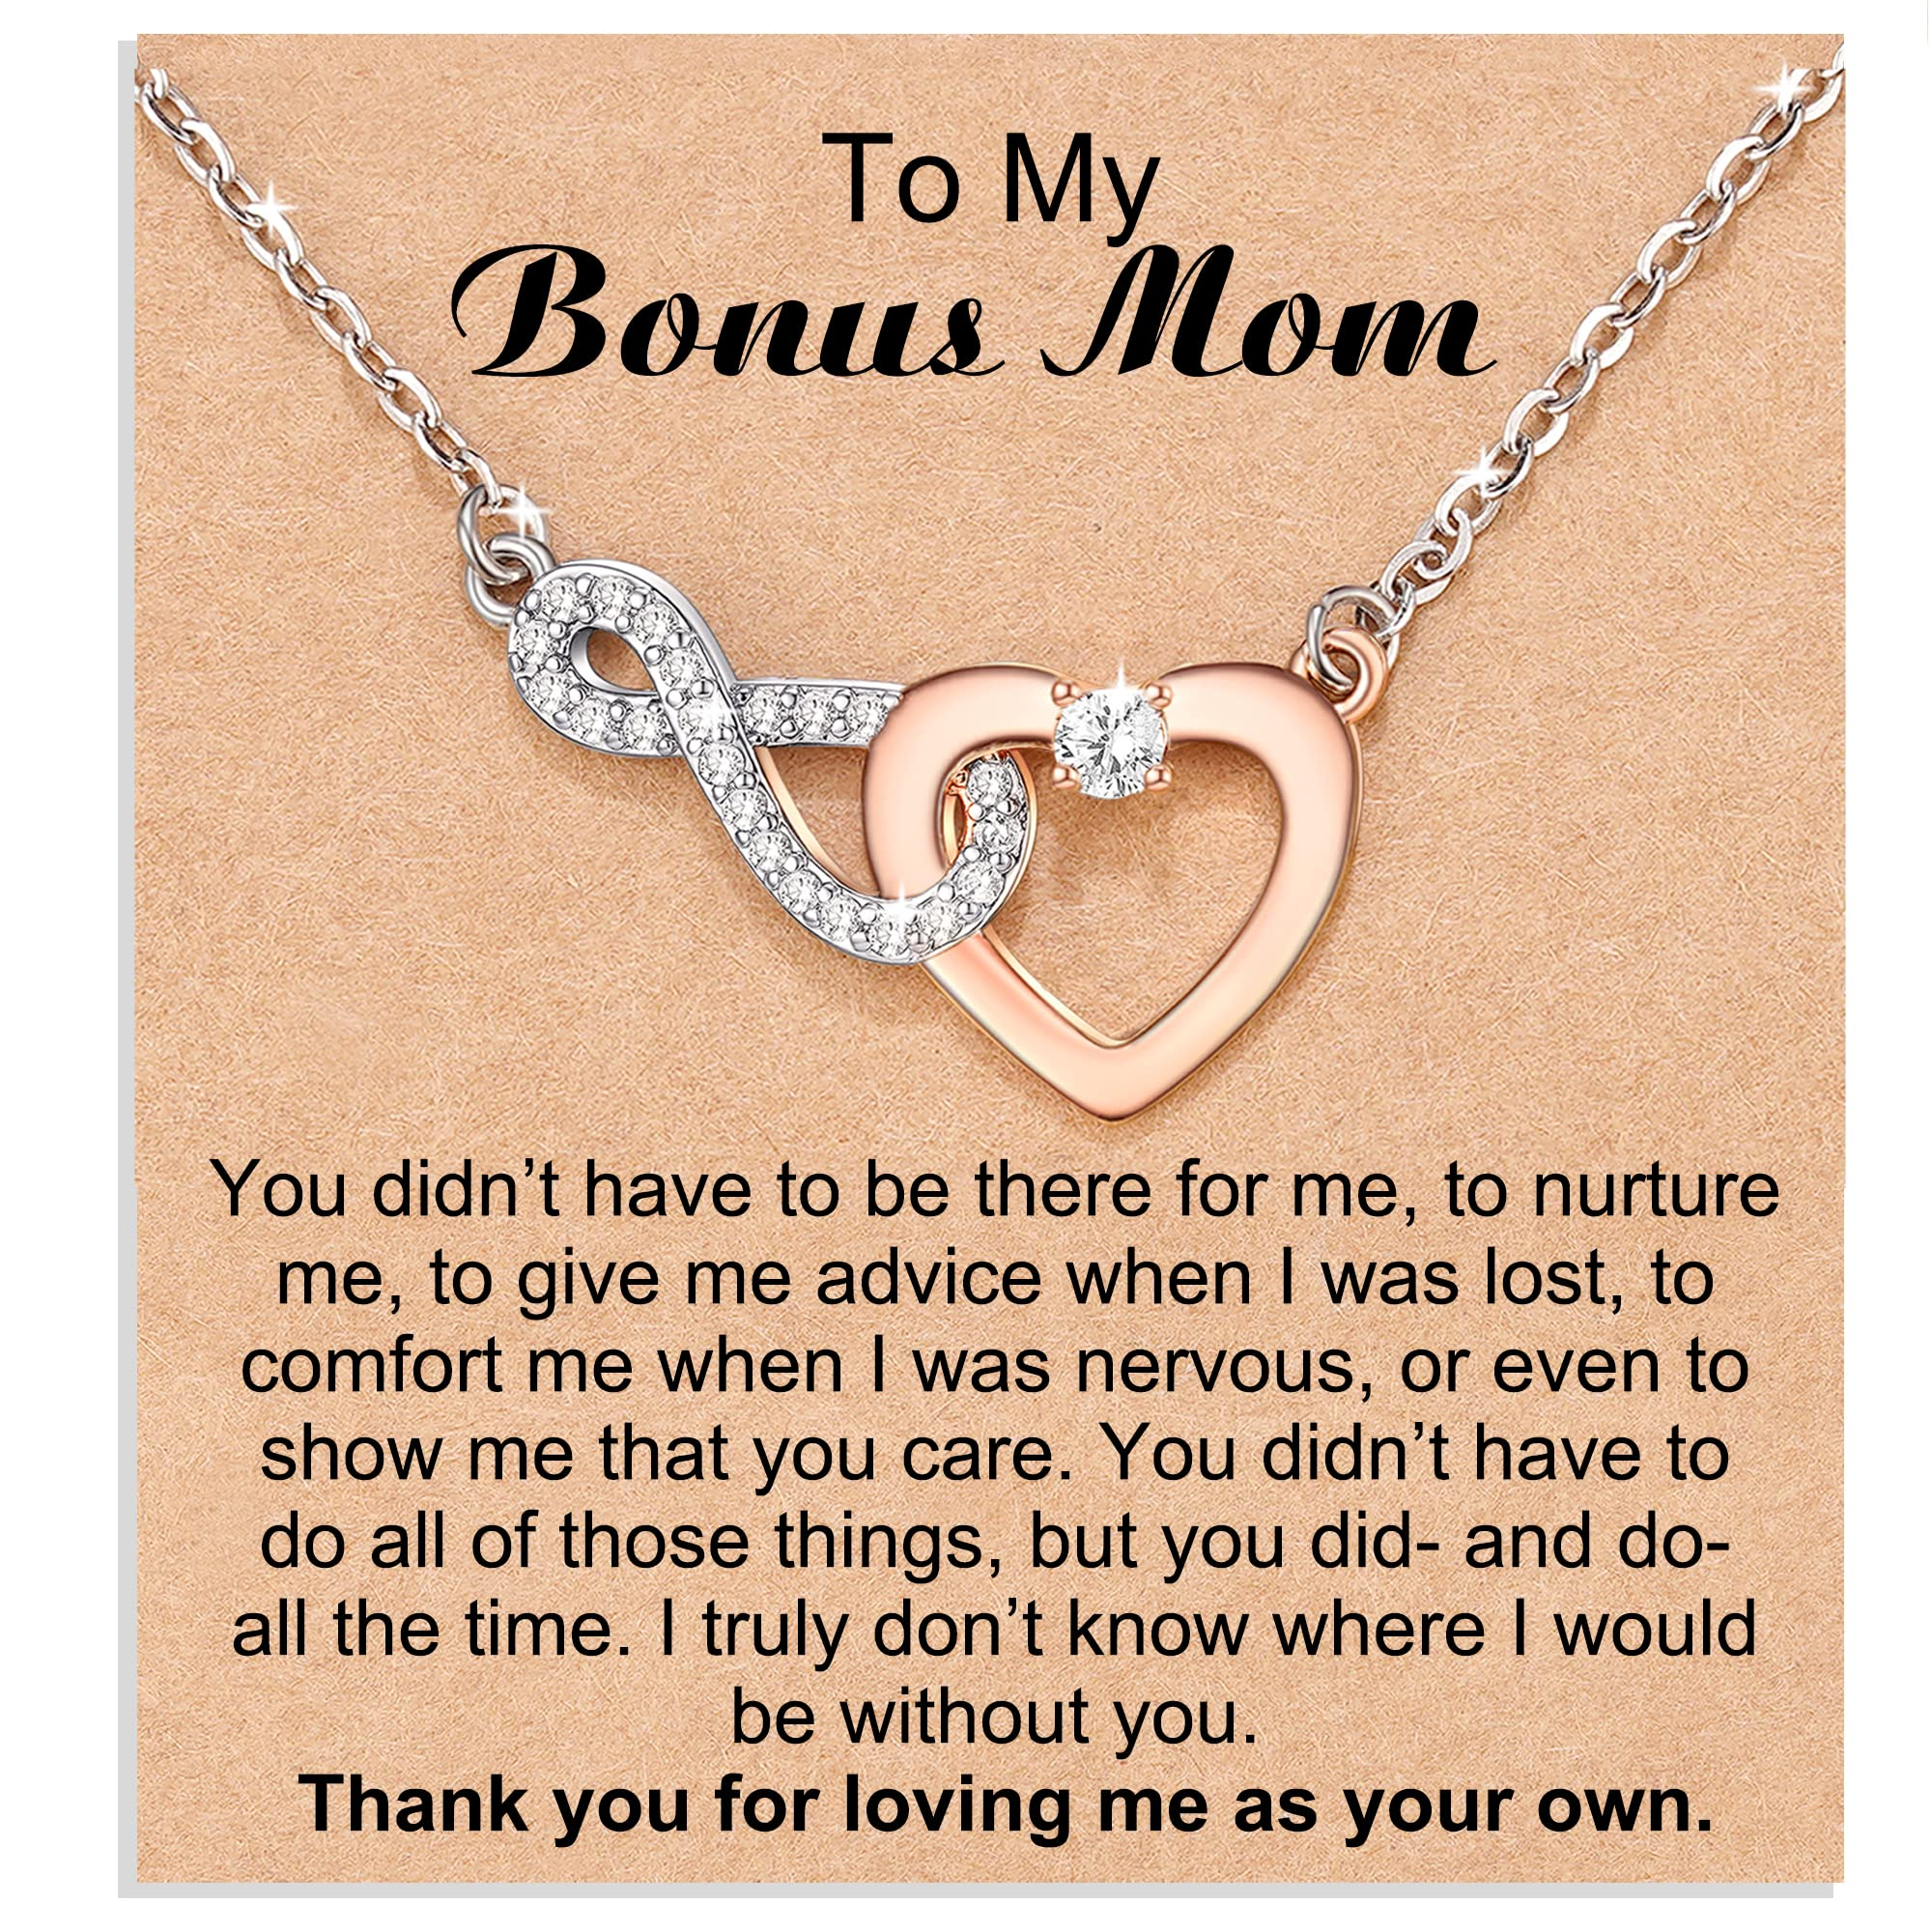 To bonus mom